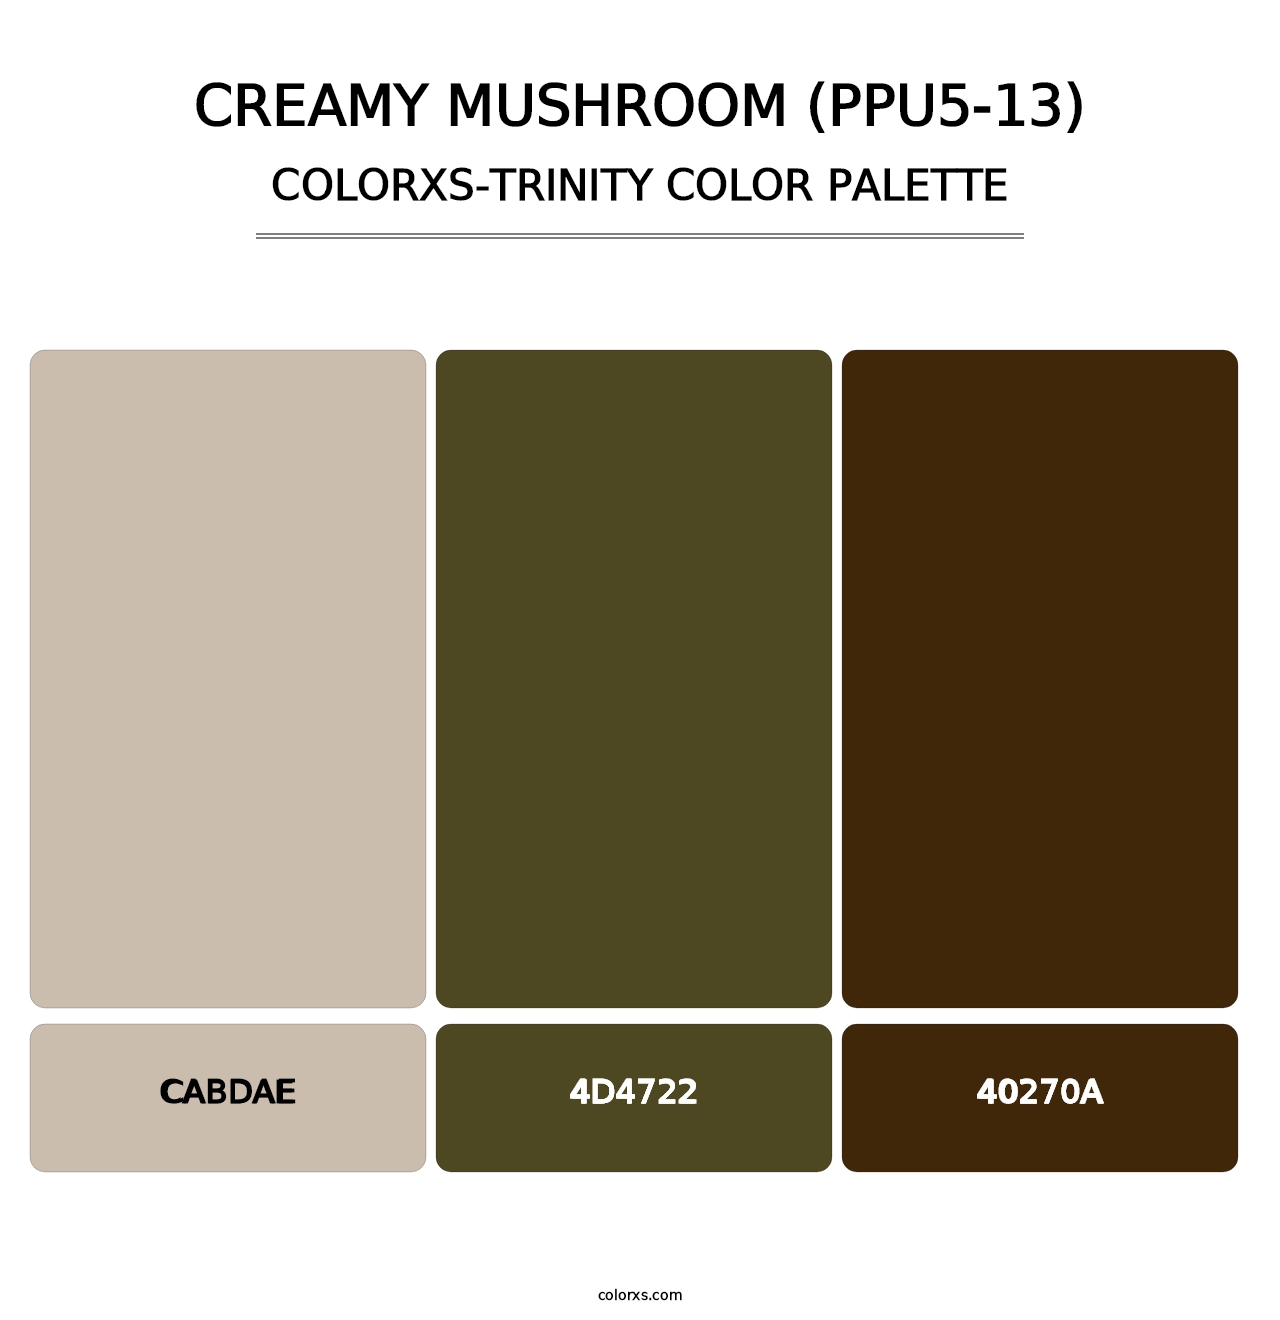 Creamy Mushroom (PPU5-13) - Colorxs Trinity Palette